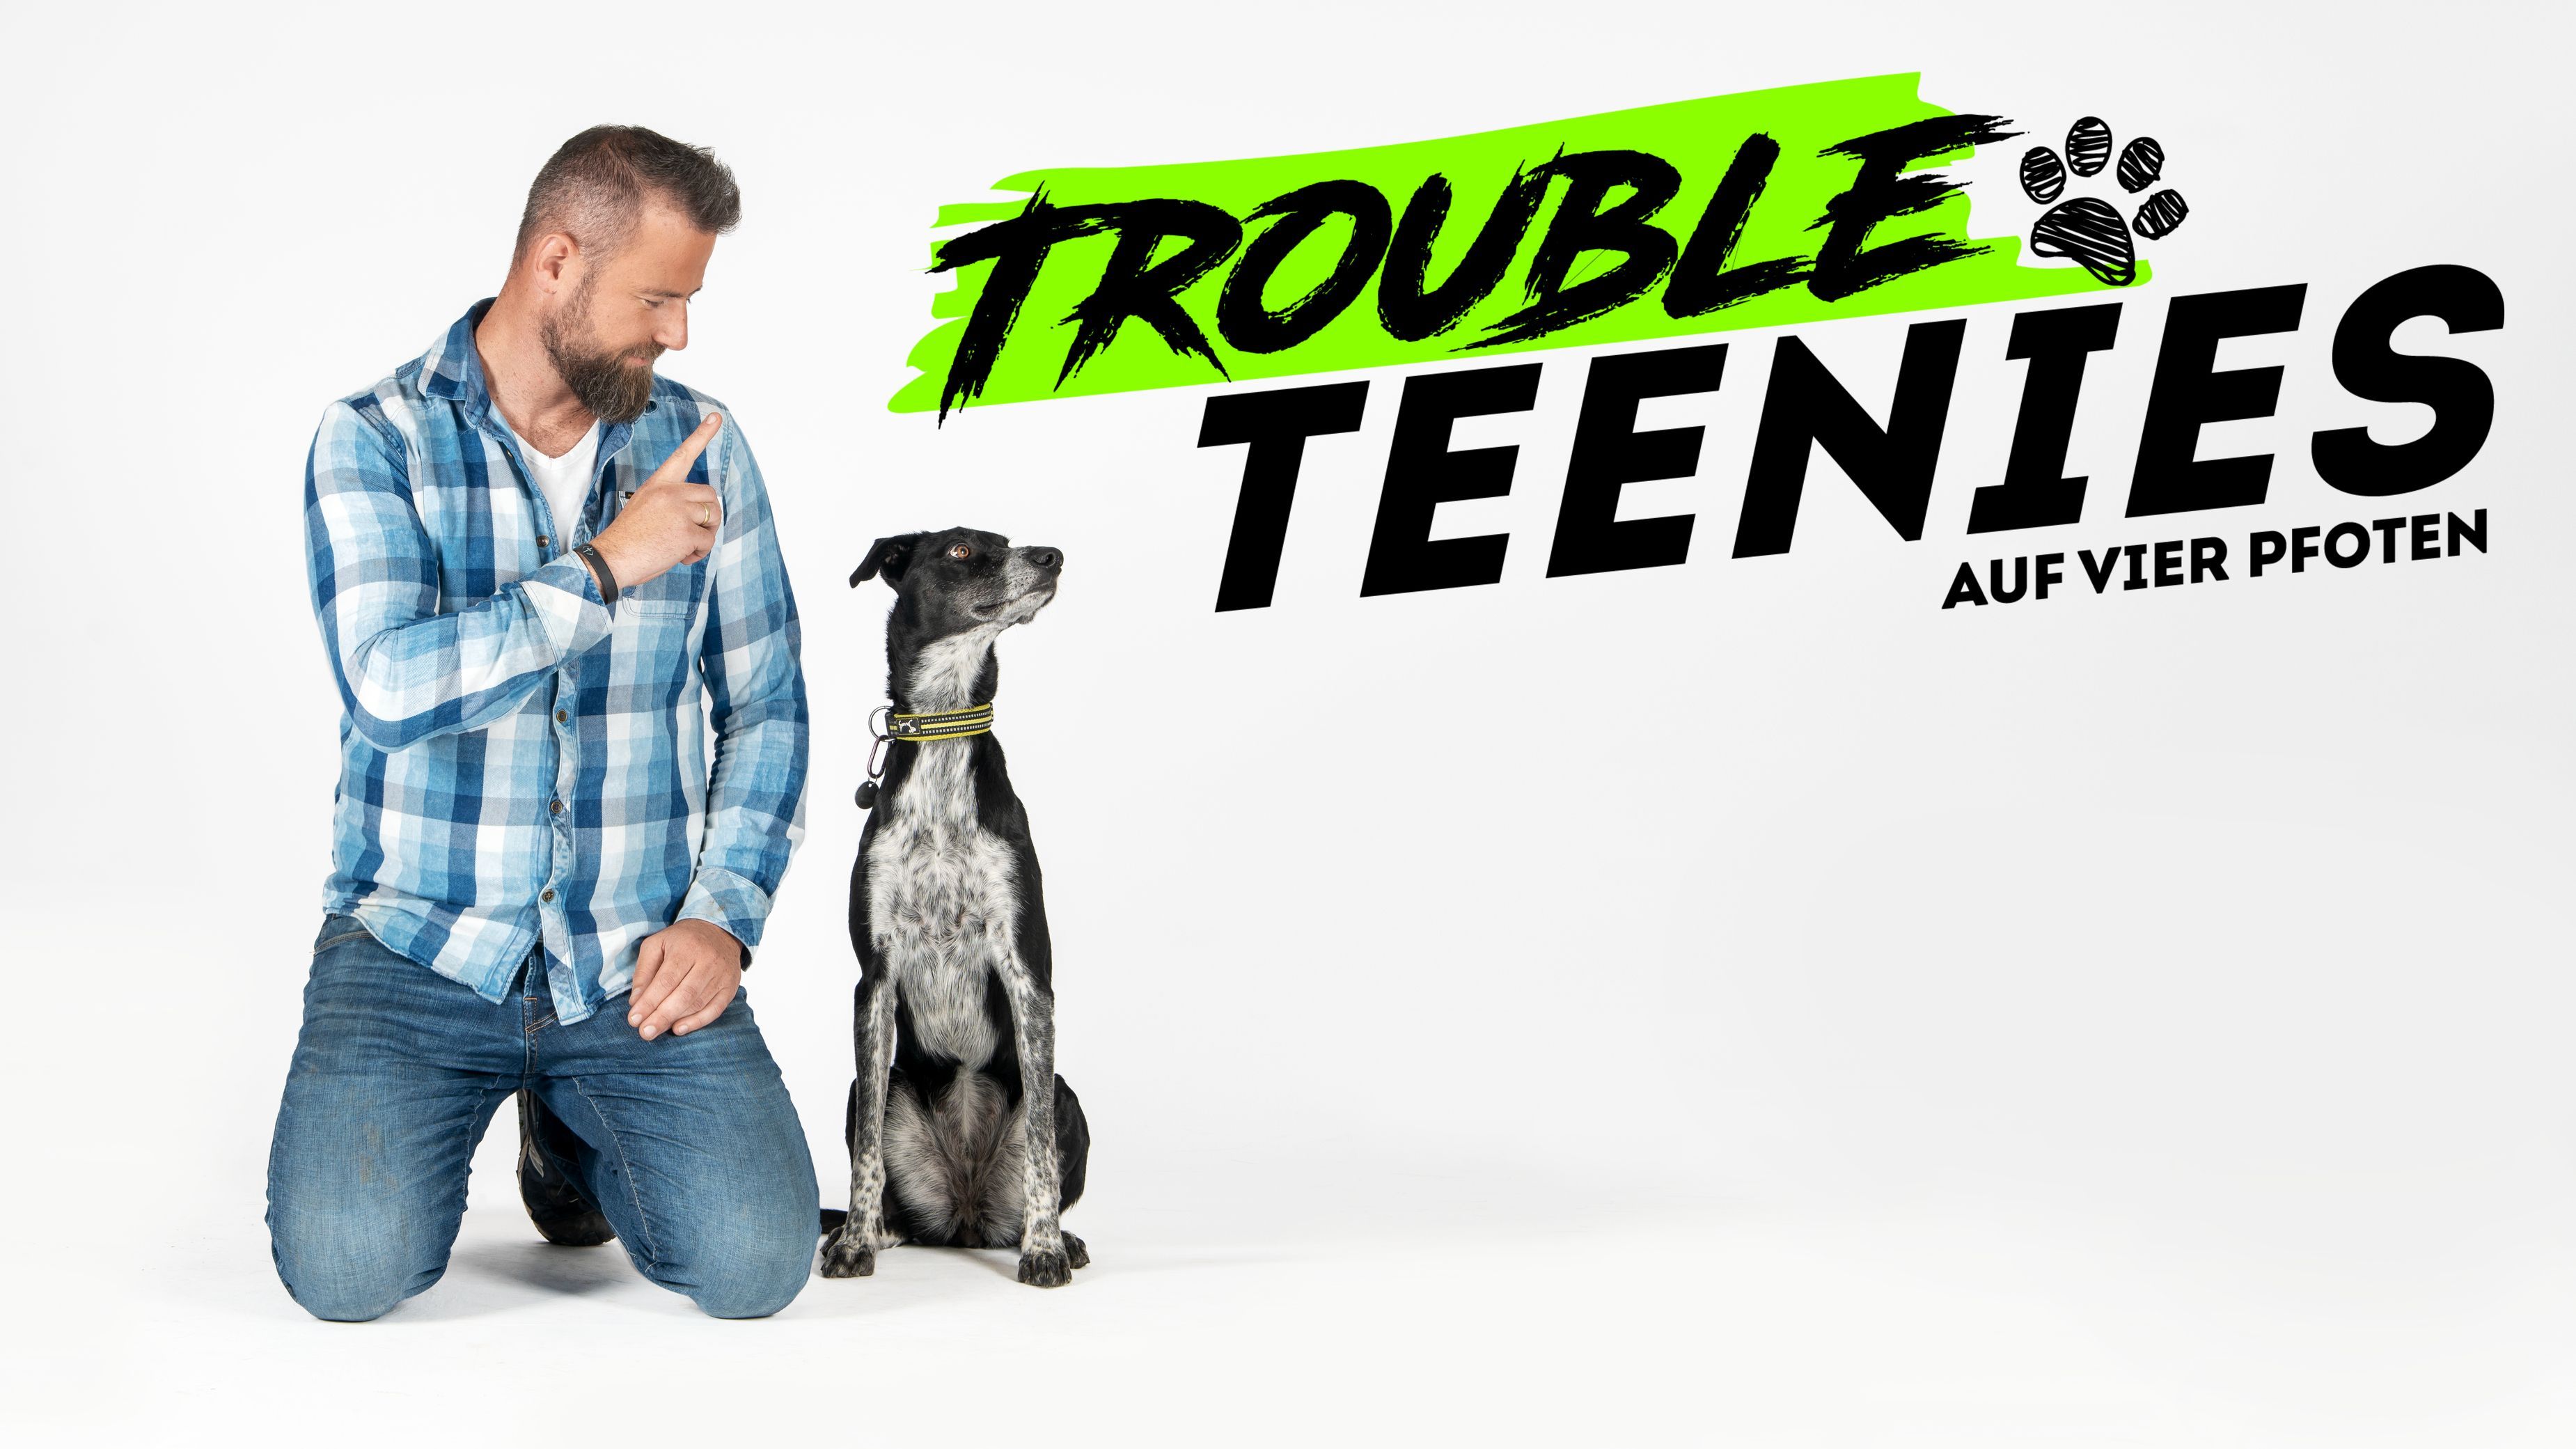 Trouble Teenies auf 4 Pfoten